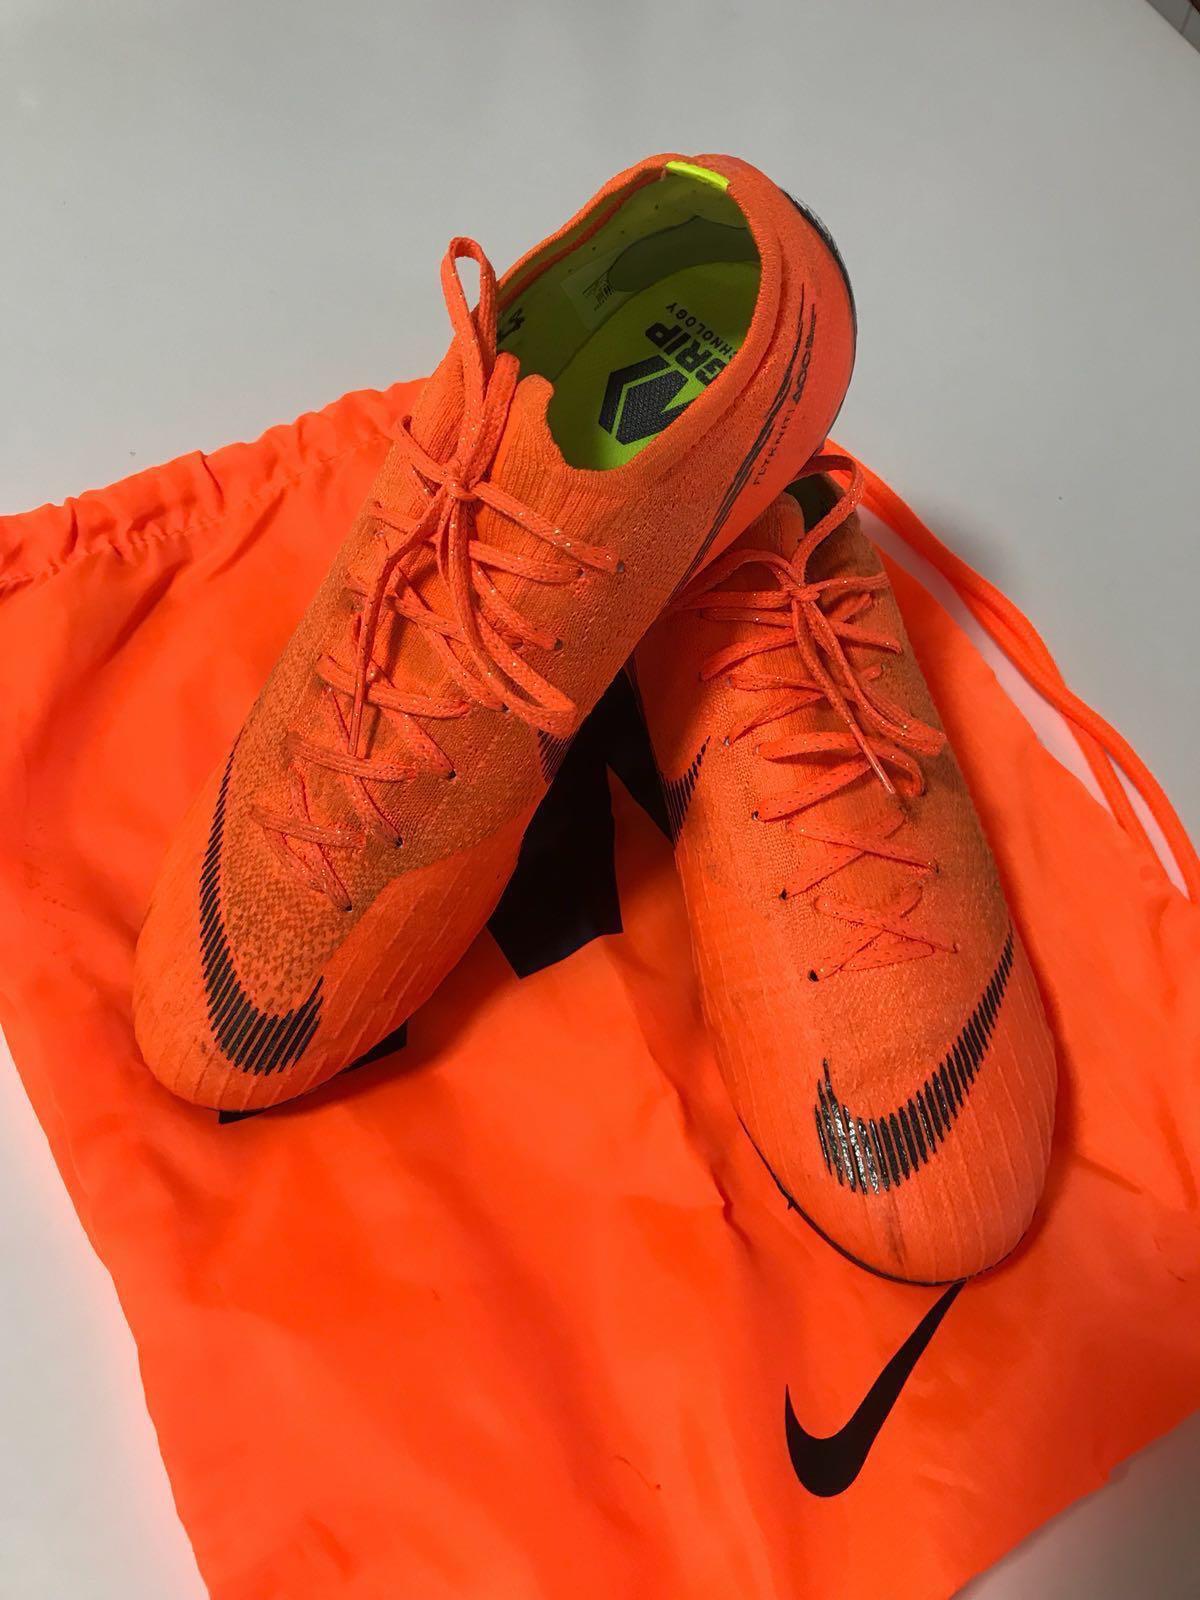 Nike Mercurial Vapor III Soccer Shoes for sale eBay